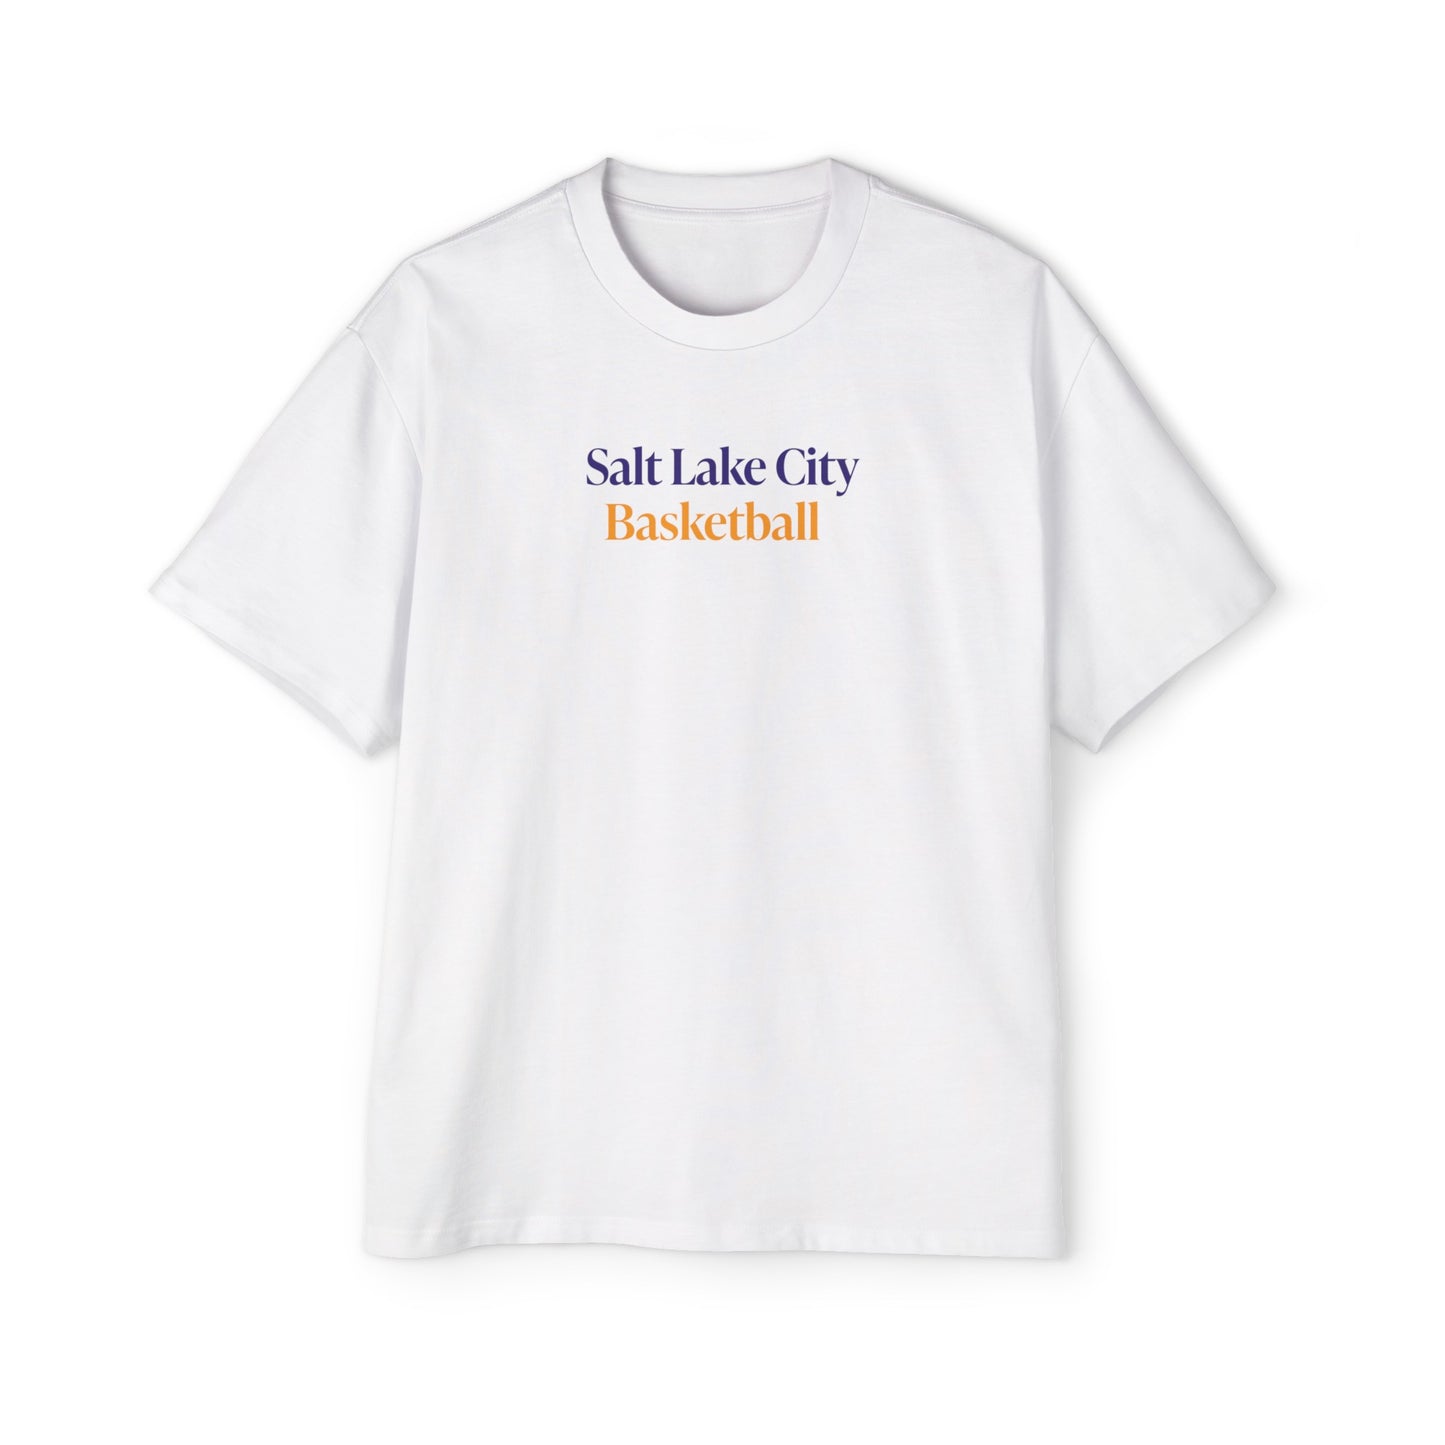 Salt Lake City Basketball Oversized T-Shirt - Primary Colors #1